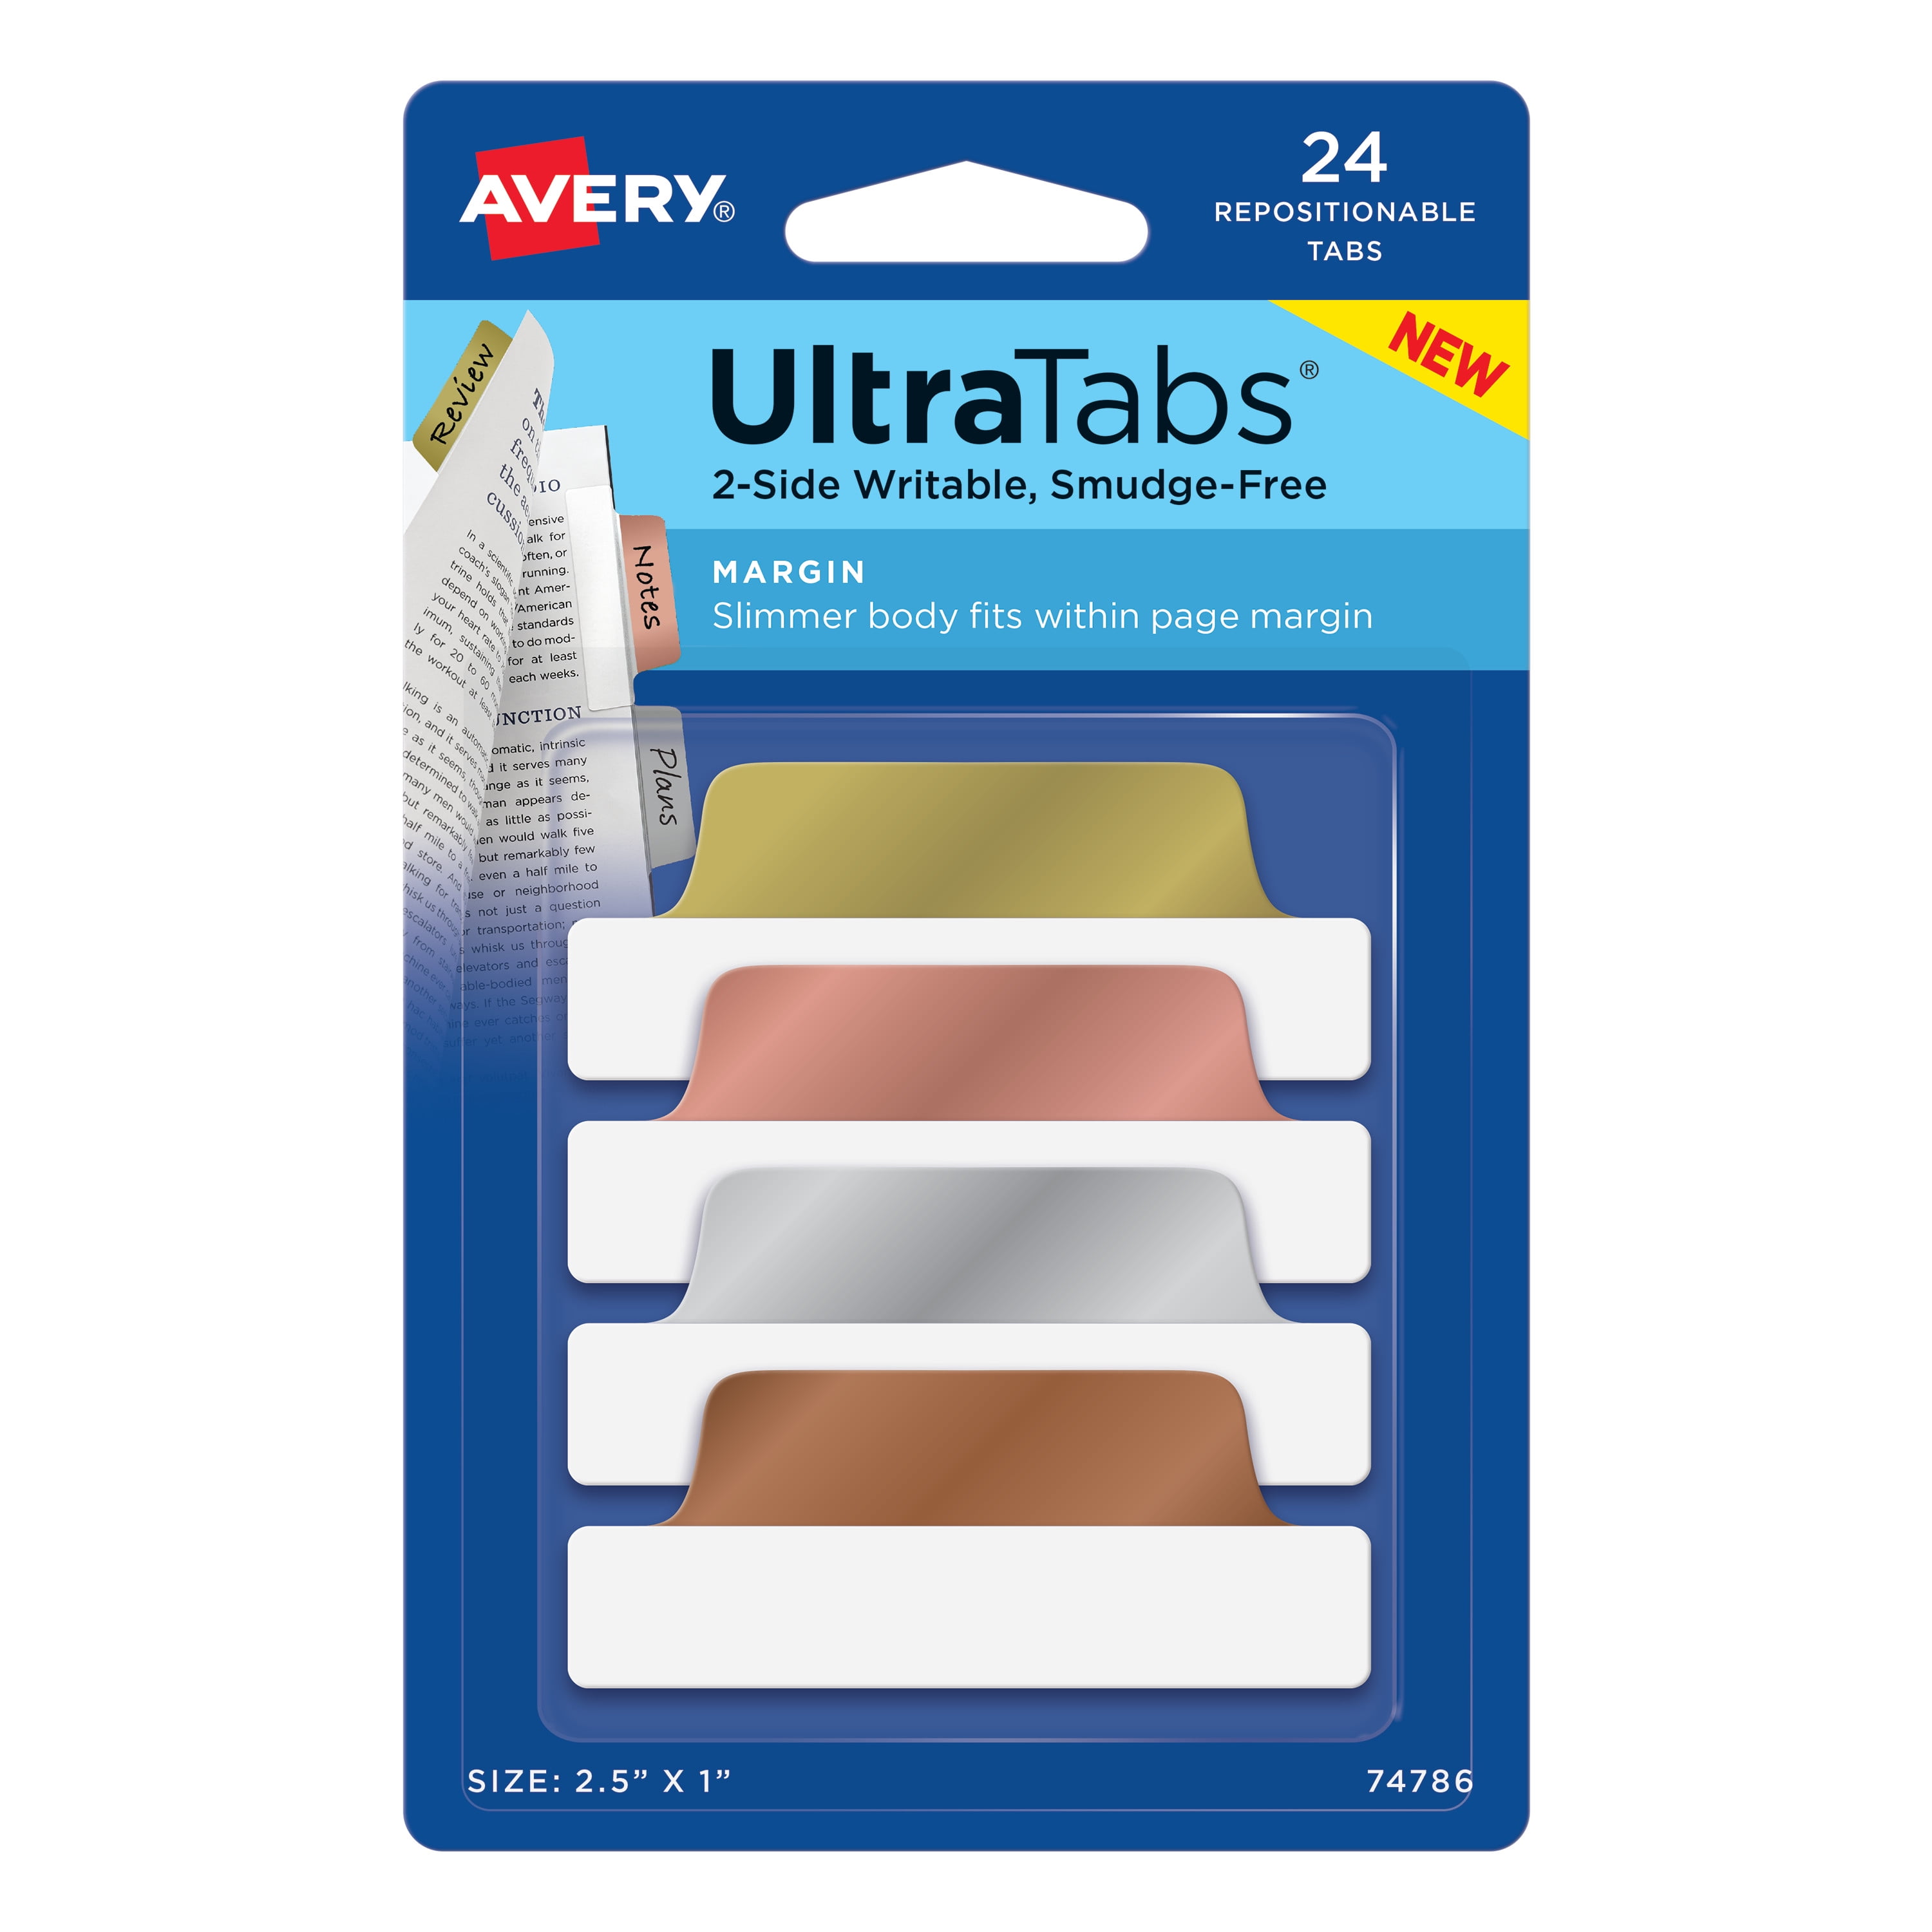 2.5 x 1 74767 2-Side Writable Ultra Tabs 24 Repositionable Margin Tabs Pink/Green/Orange New Version 